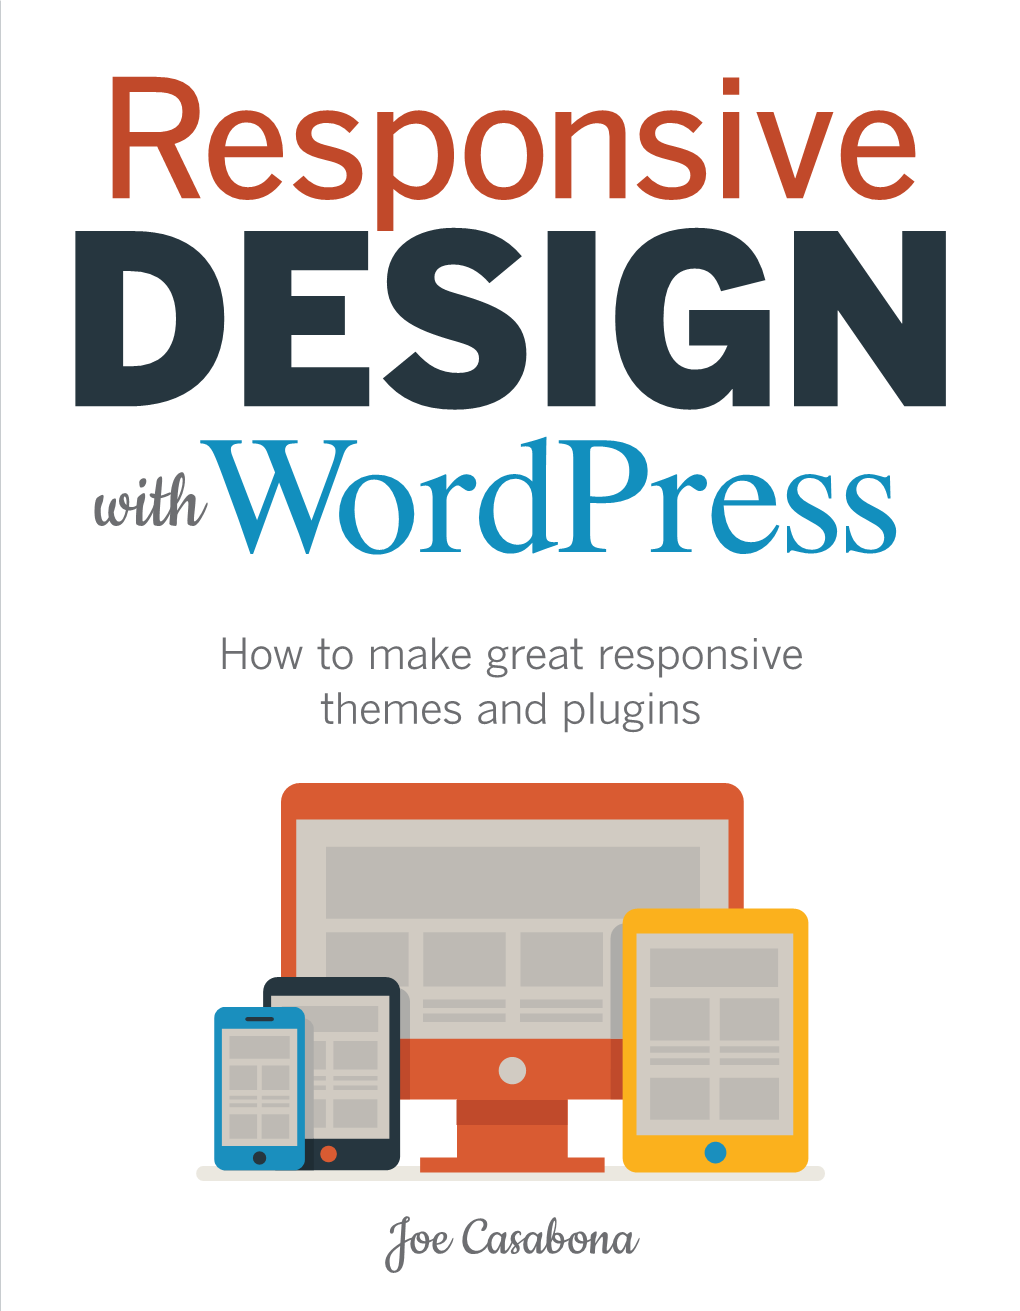 Responsive Design with Wordpress, Expert Web